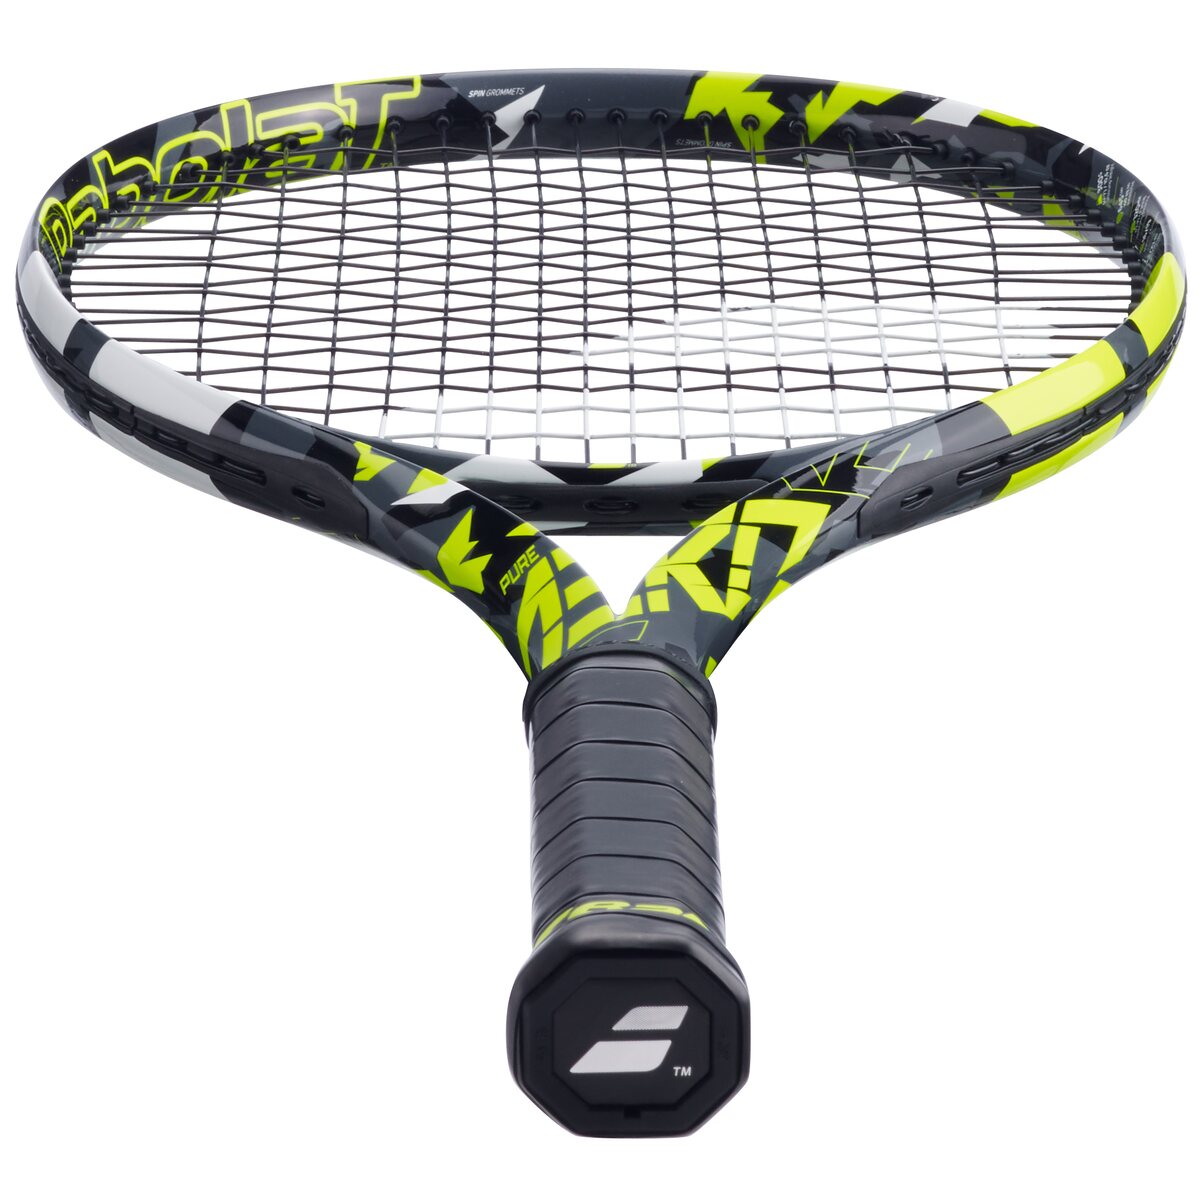 Babolat Pure Aero tennisketcher